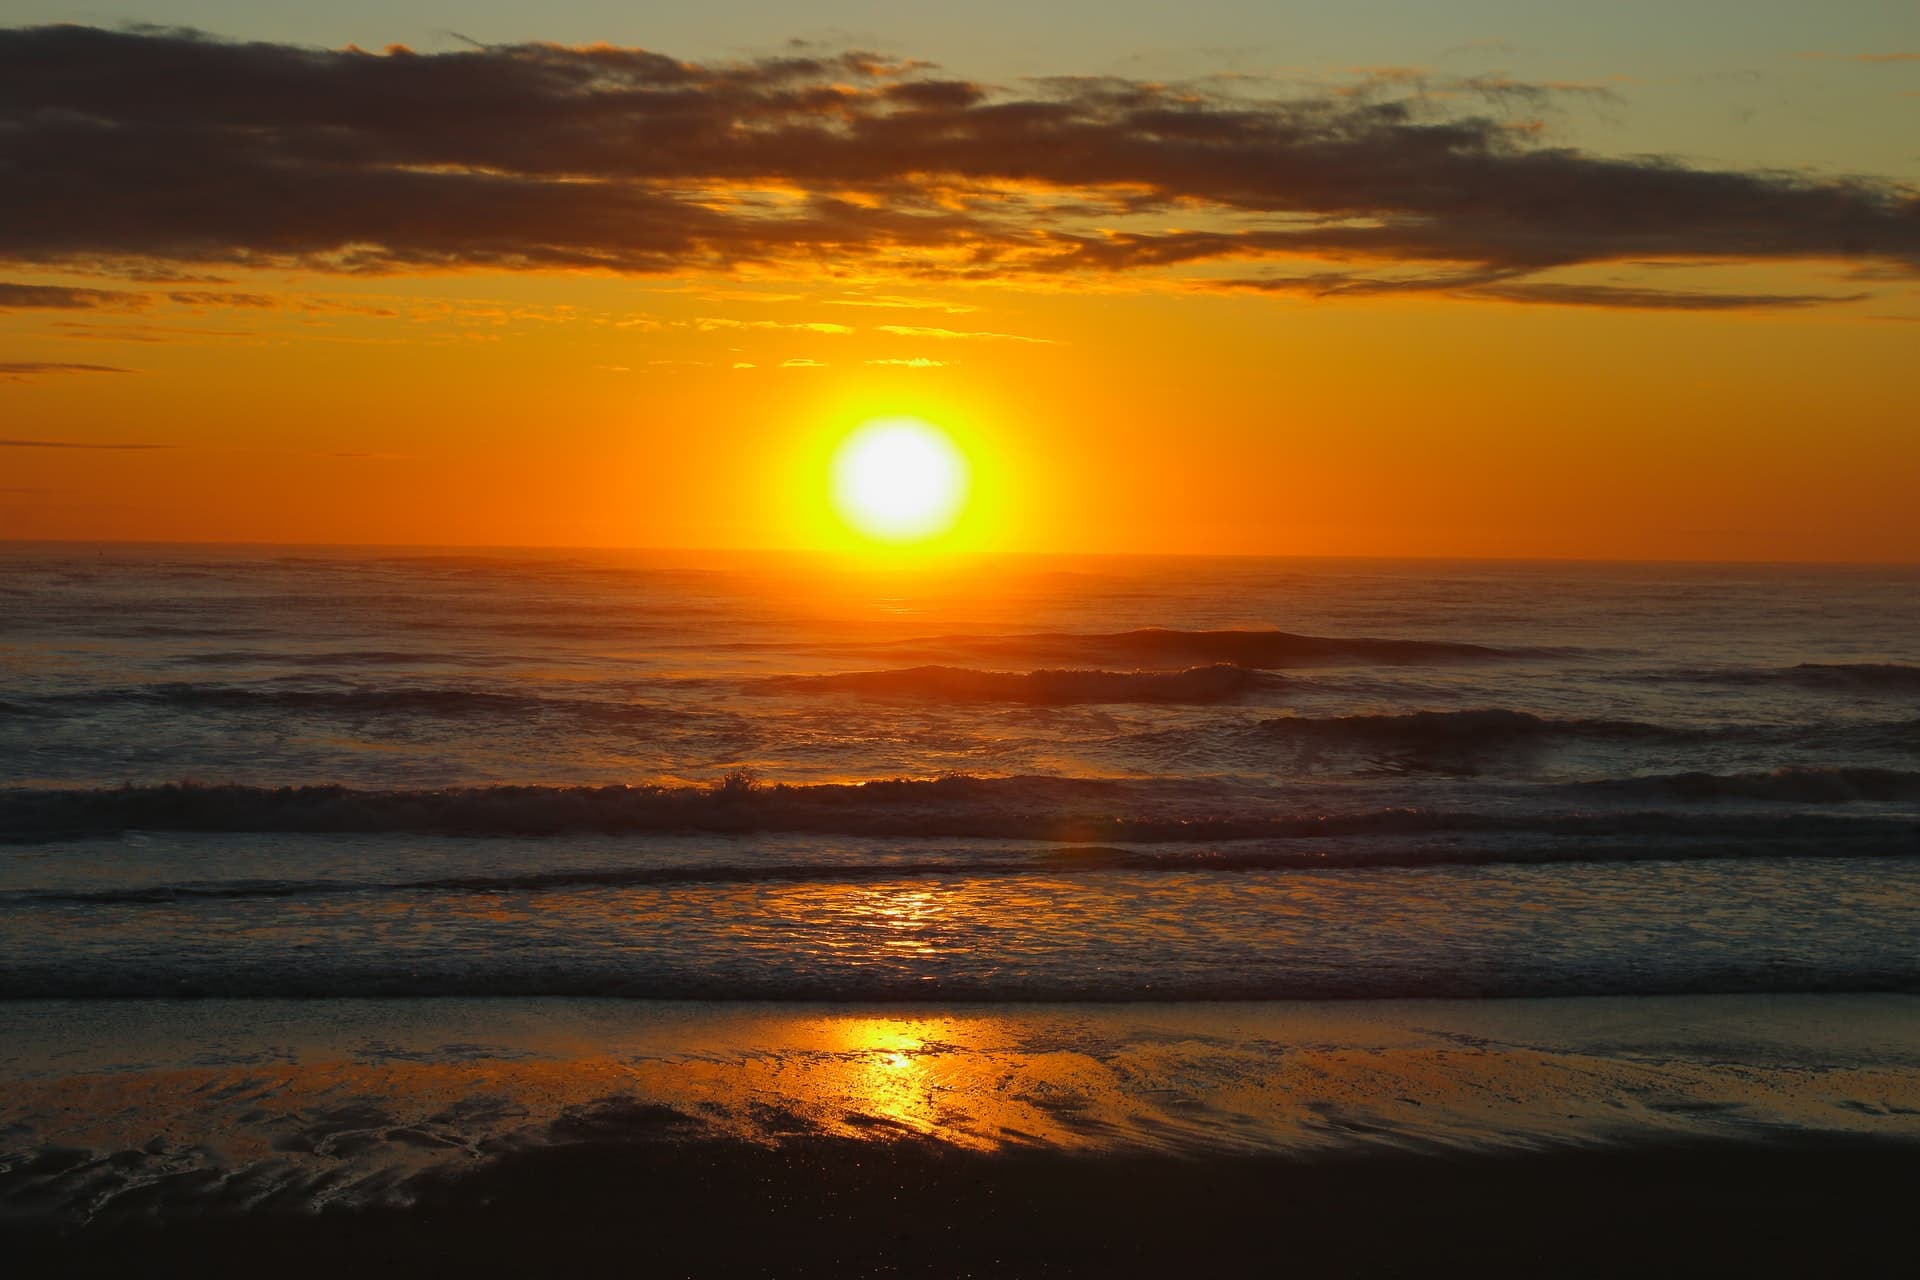 Sunrise surf on one of the dog friendly beaches in Massachusetts - Photo by Brian Yurasits on Unsplash